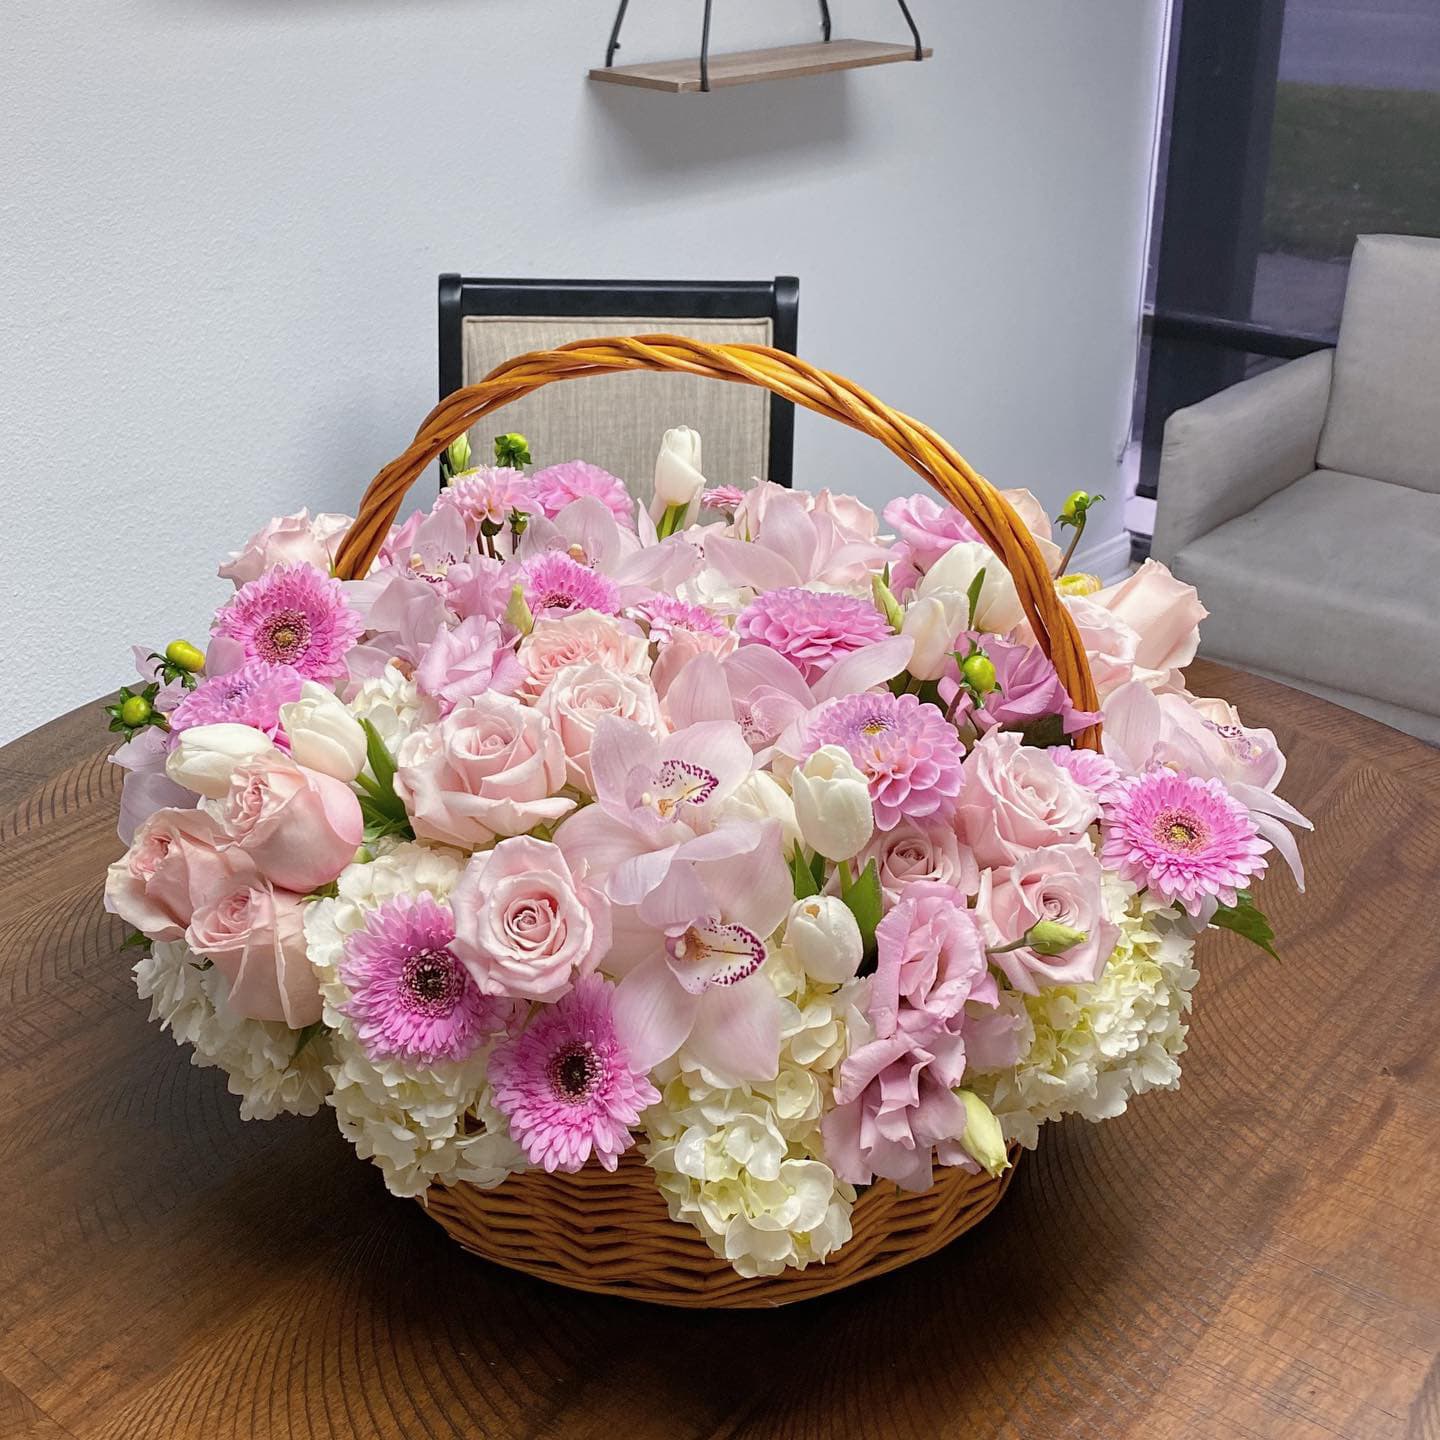 Flower Basket 'Our Dreams', Send Flowers Same Day Uk